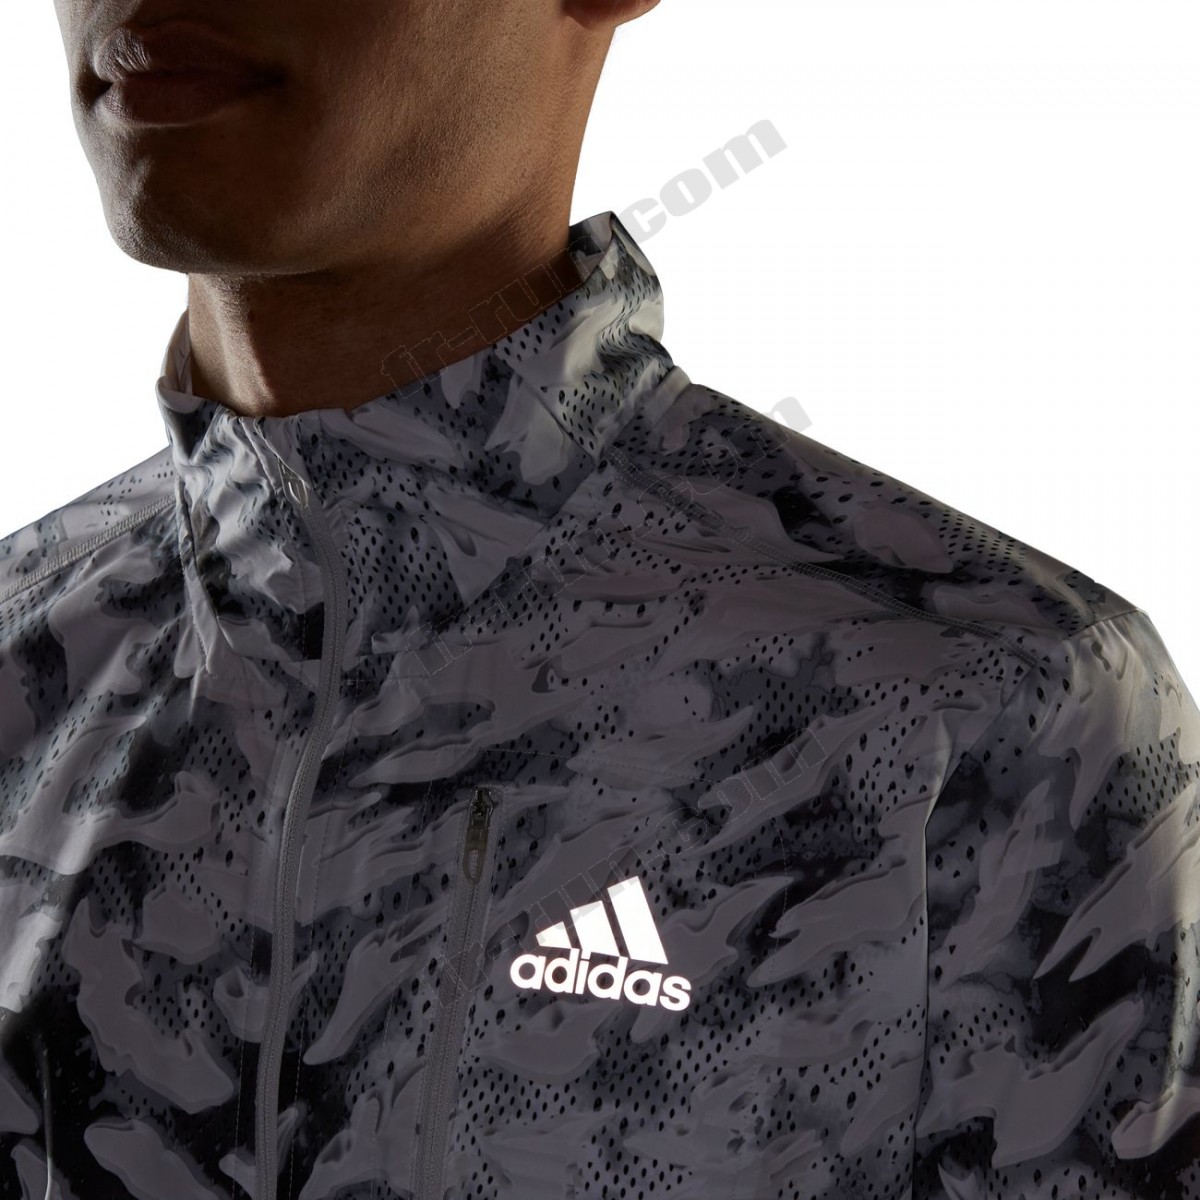 Adidas/running homme ADIDAS Adidas Fast Graphic Primeblue ◇◇◇ Pas Cher Du Tout - -7